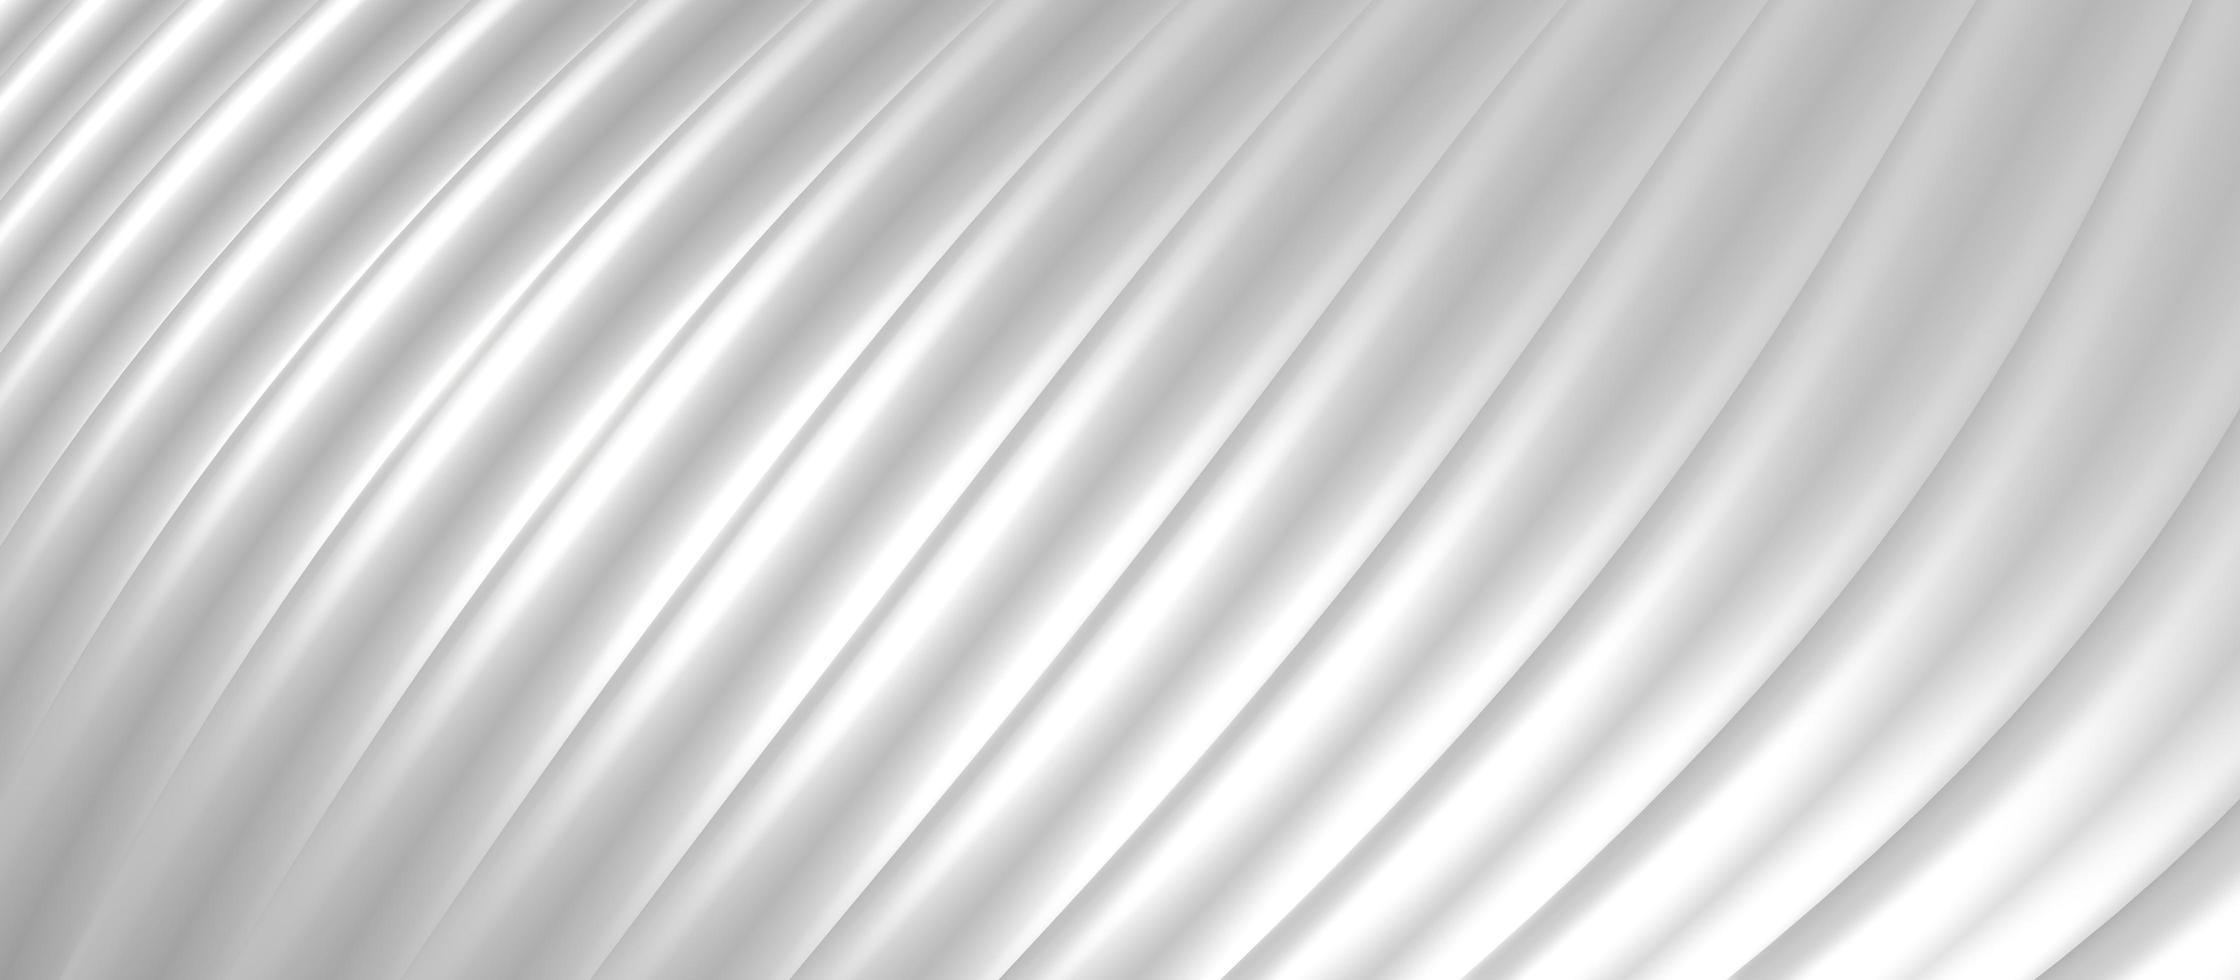 white plastic wave parallel lines background Wave of a bent curve 3d illustration photo